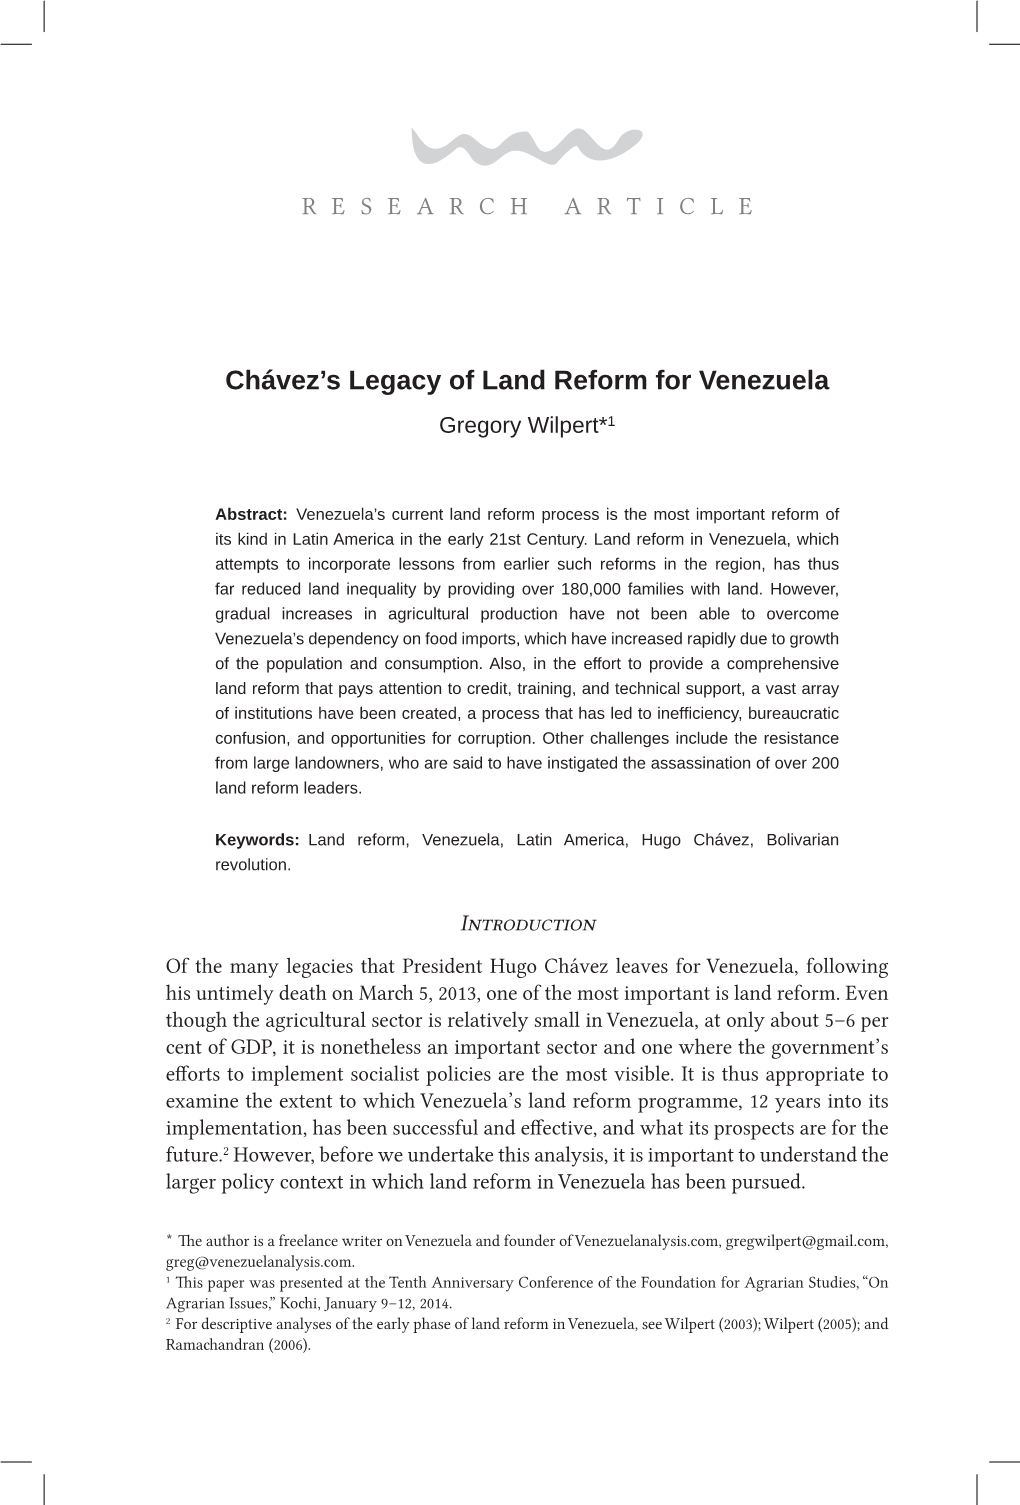 Chávez's Legacy of Land Reform for Venezuela